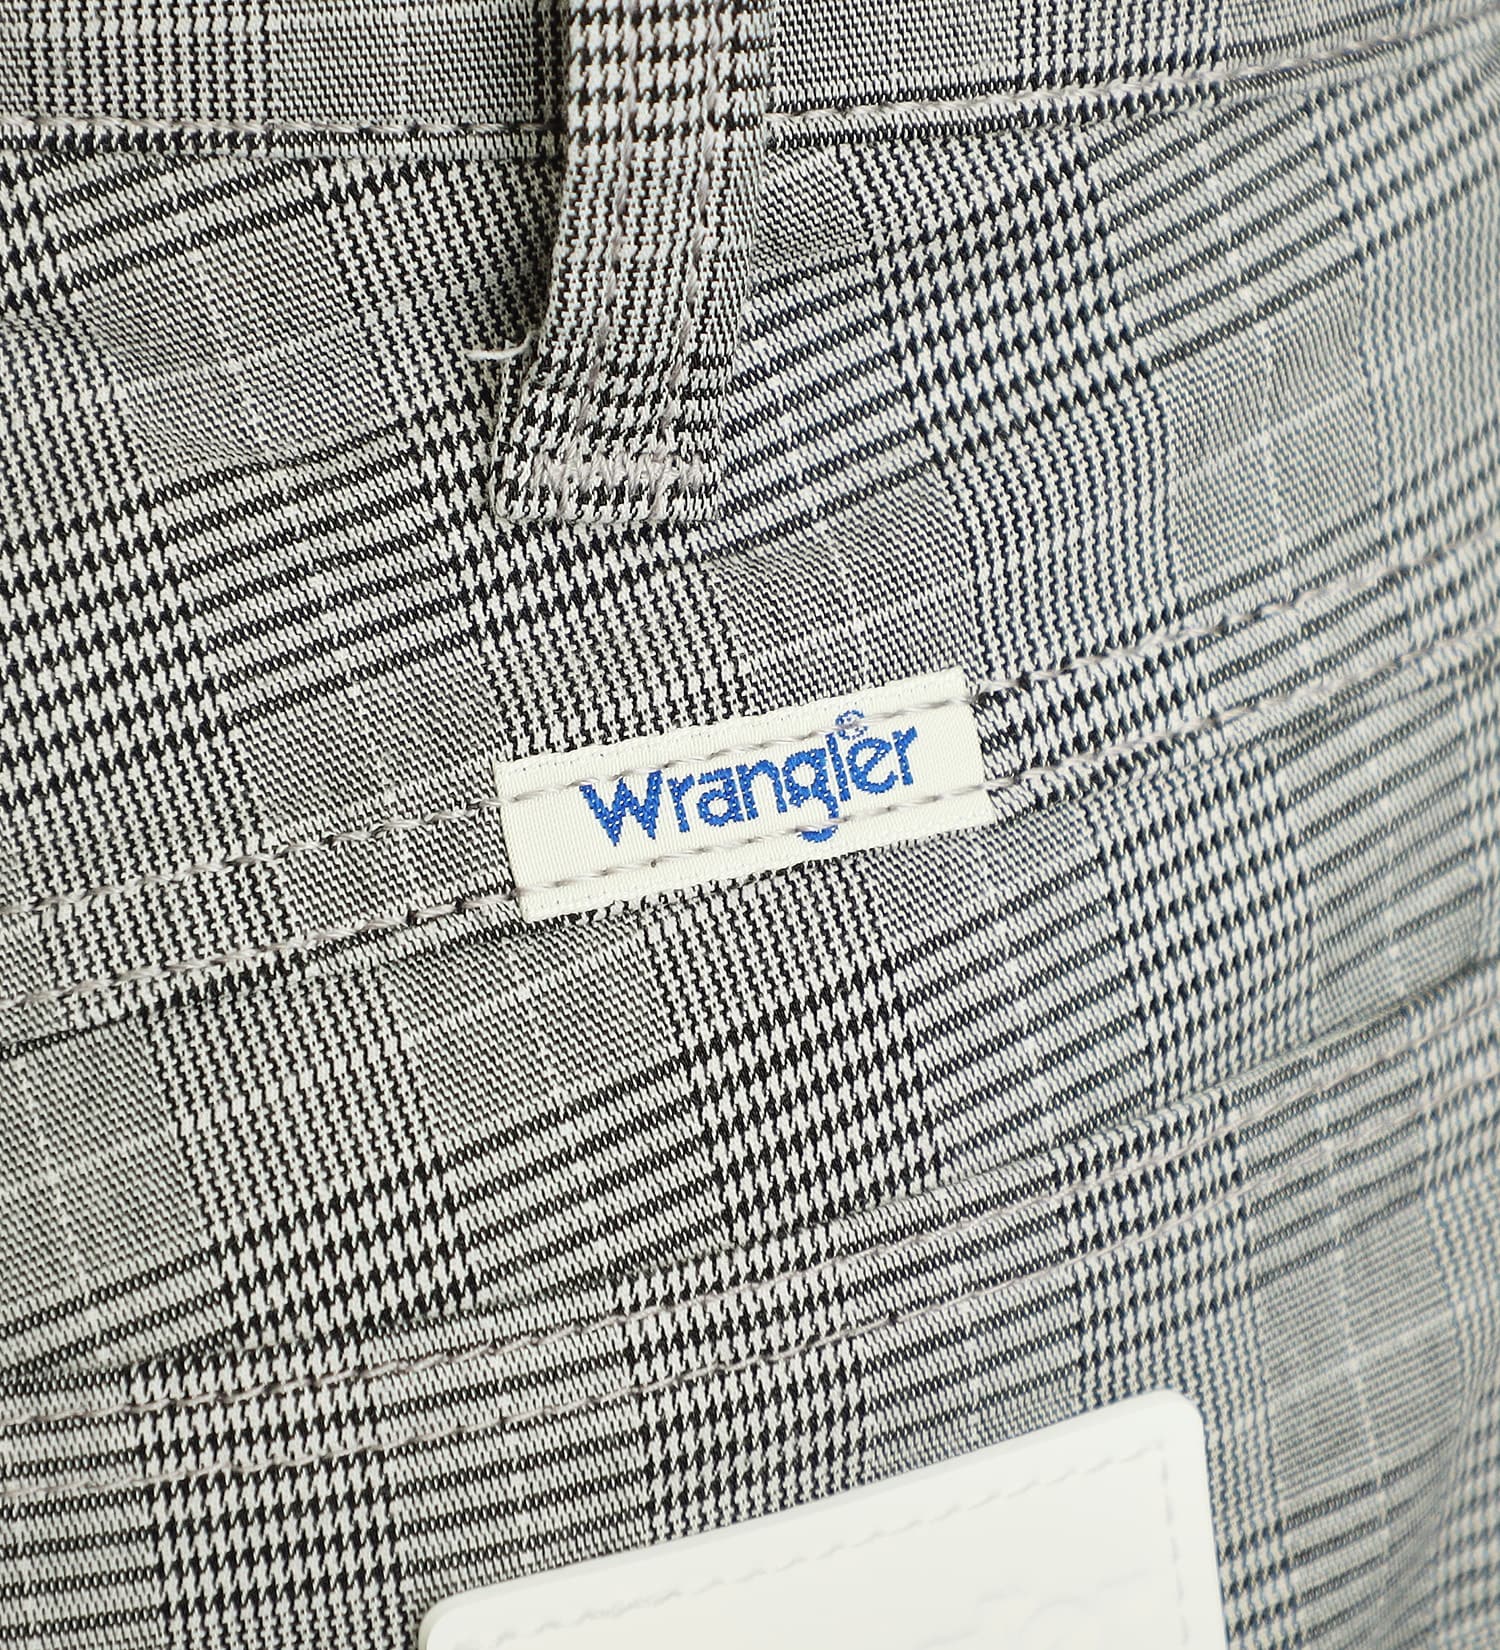 Wrangler(ラングラー)の【試着対象】【涼・COOL】ドライタッチストレートパンツ|パンツ/パンツ/メンズ|チェック